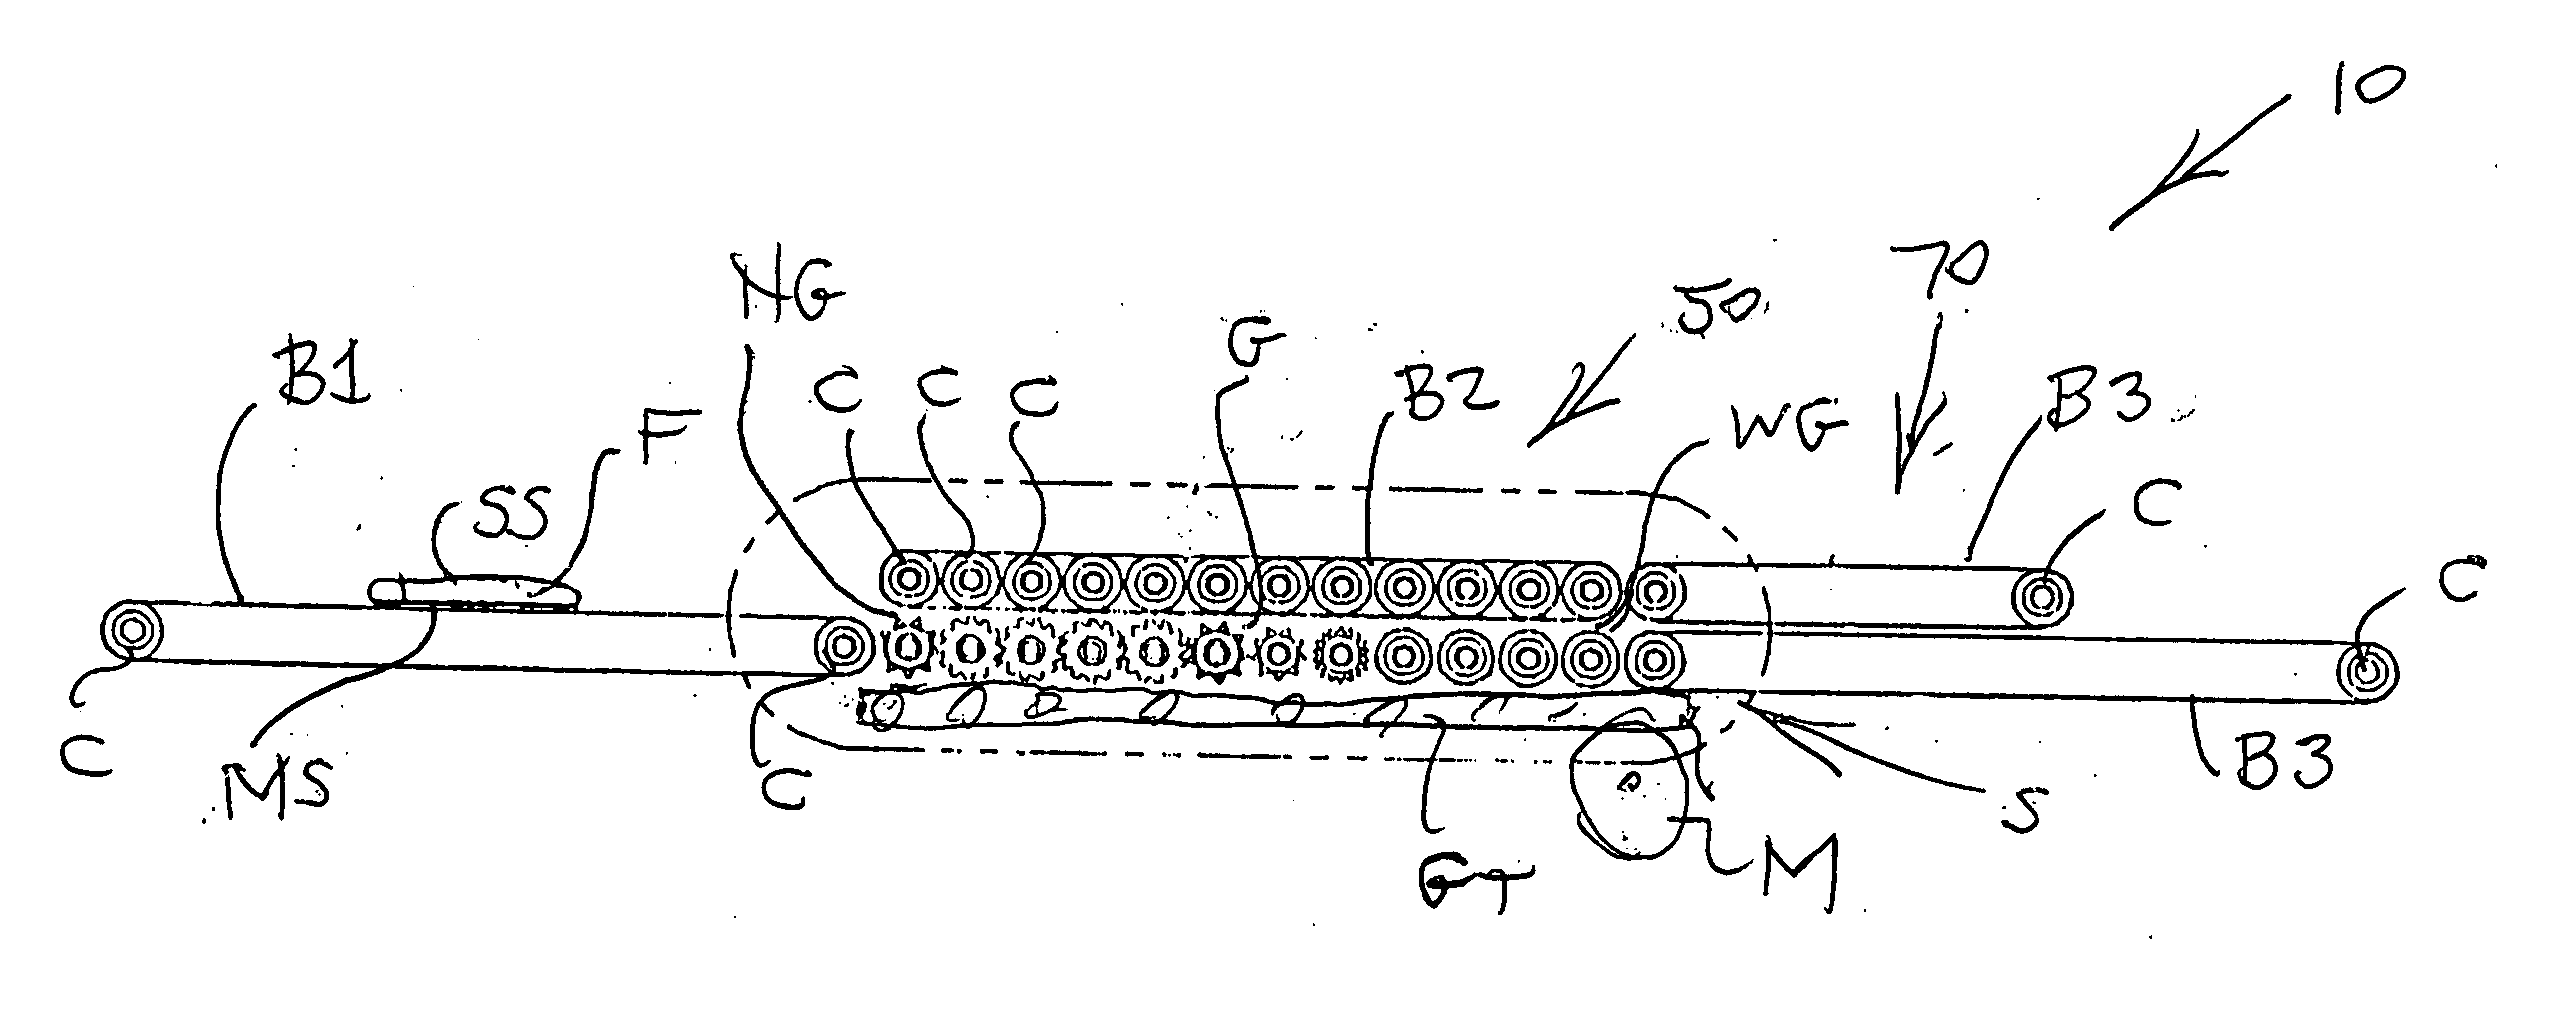 Belt and roller flattening apparatus